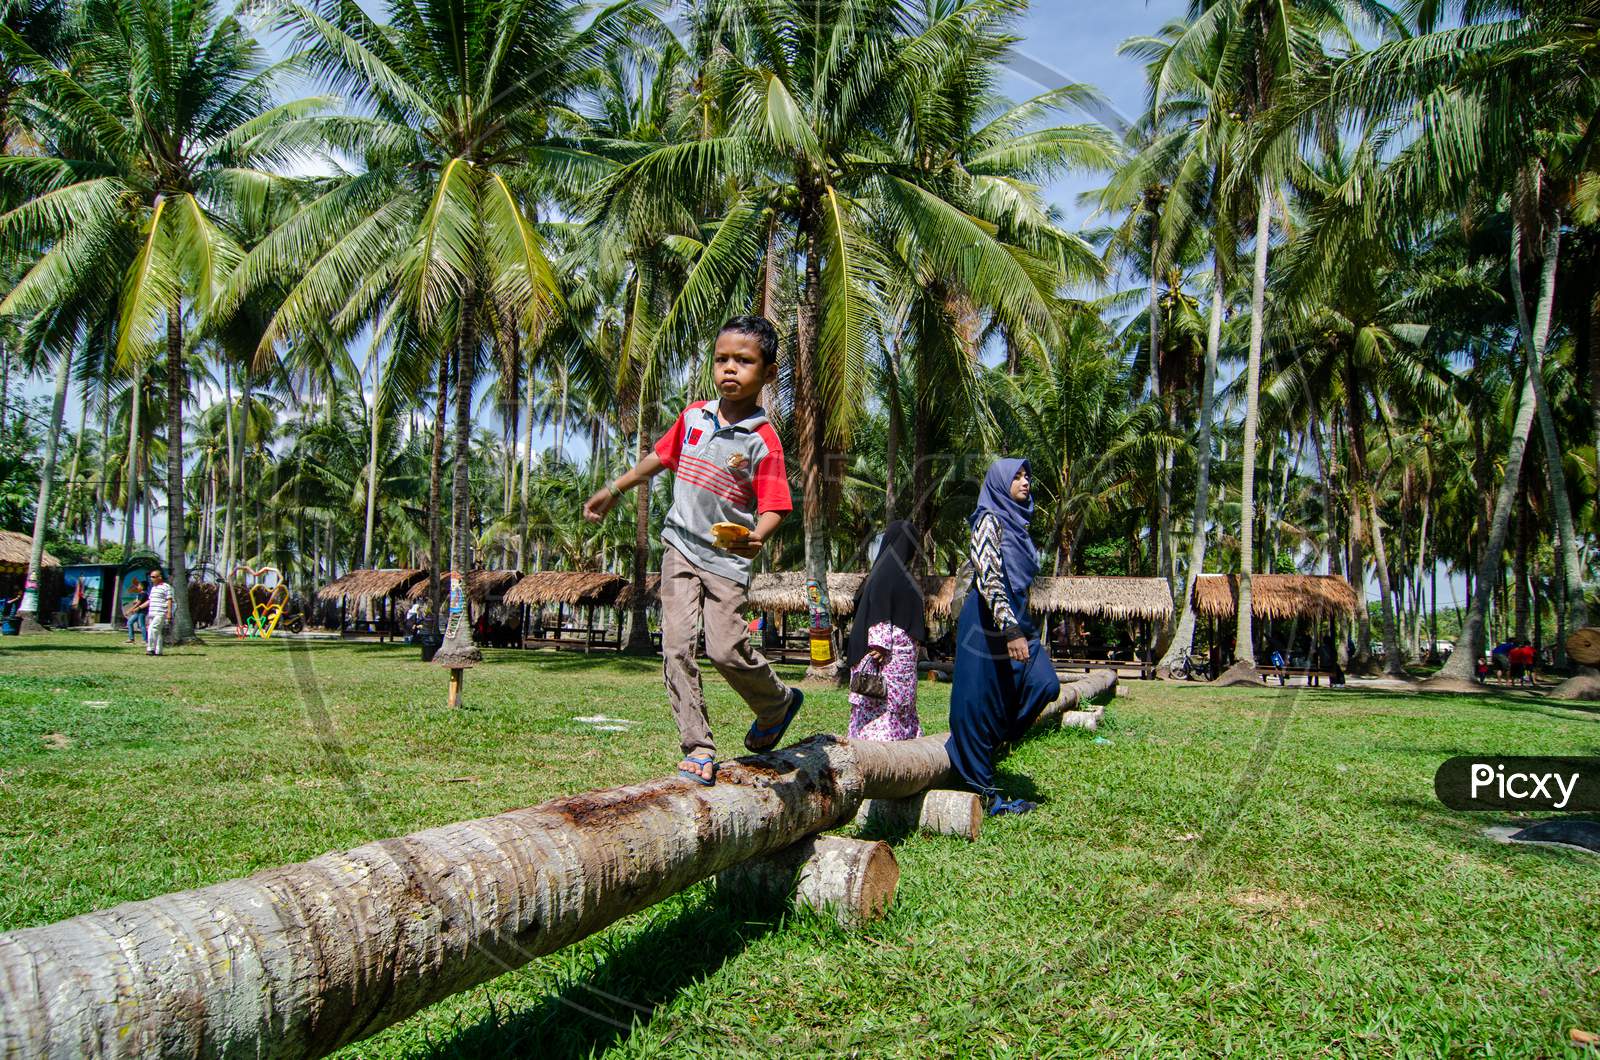 Kids Walk On The Trunk Pf Coconut